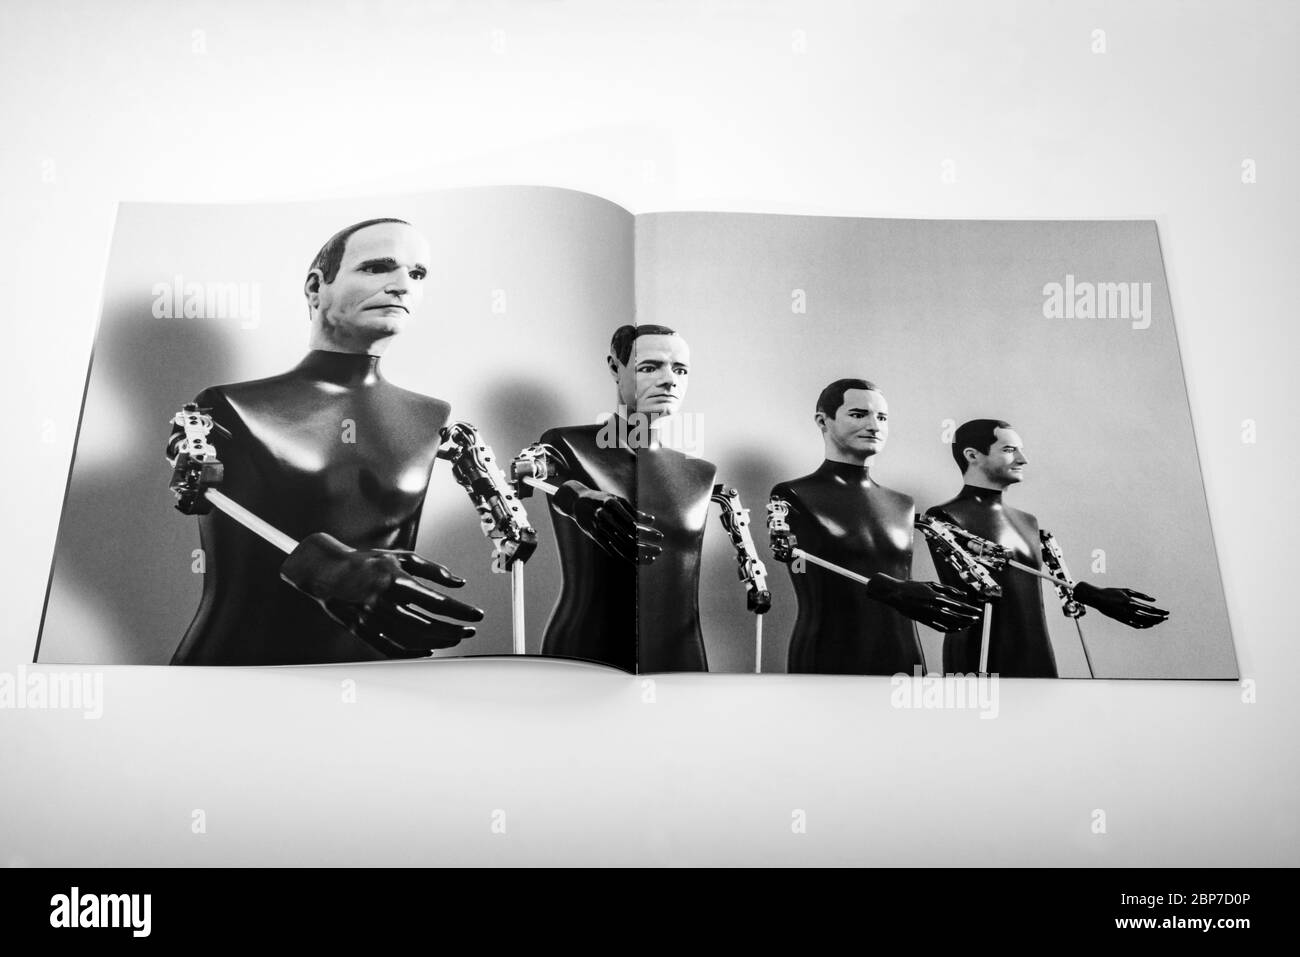 Kraftwerk robots Black and White Stock Photos & Images - Alamy